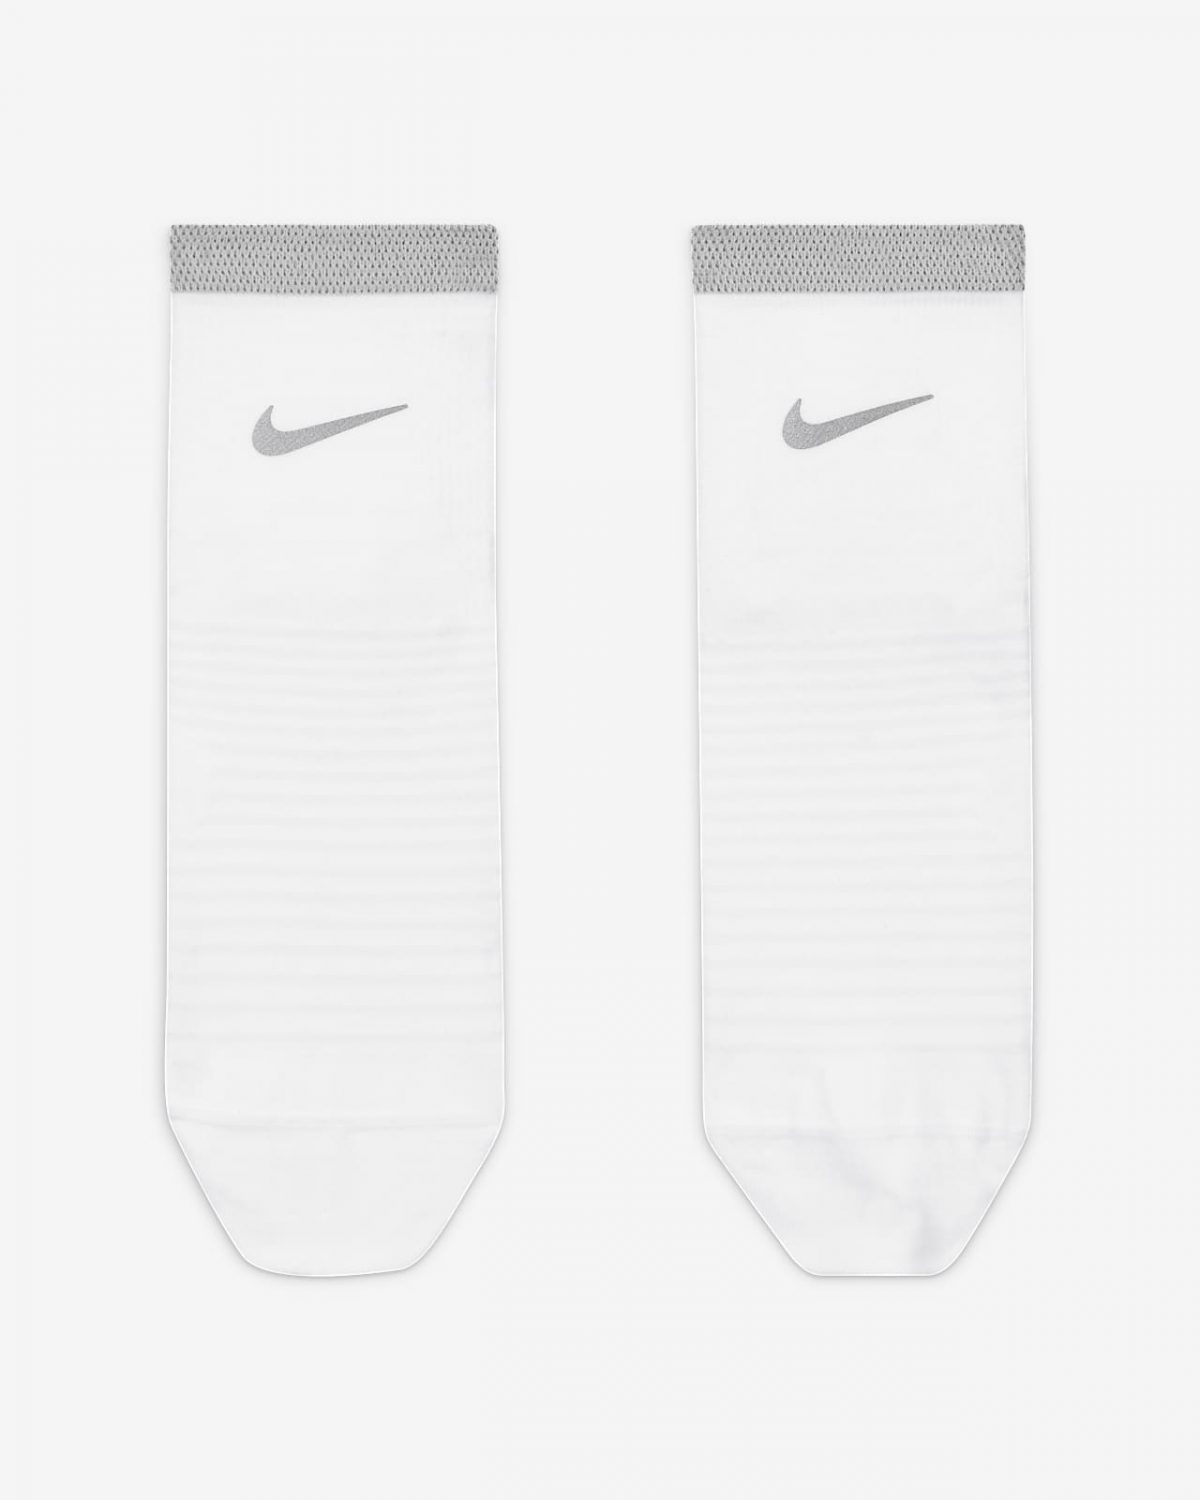 Носки Nike Spark Lightweight фотография